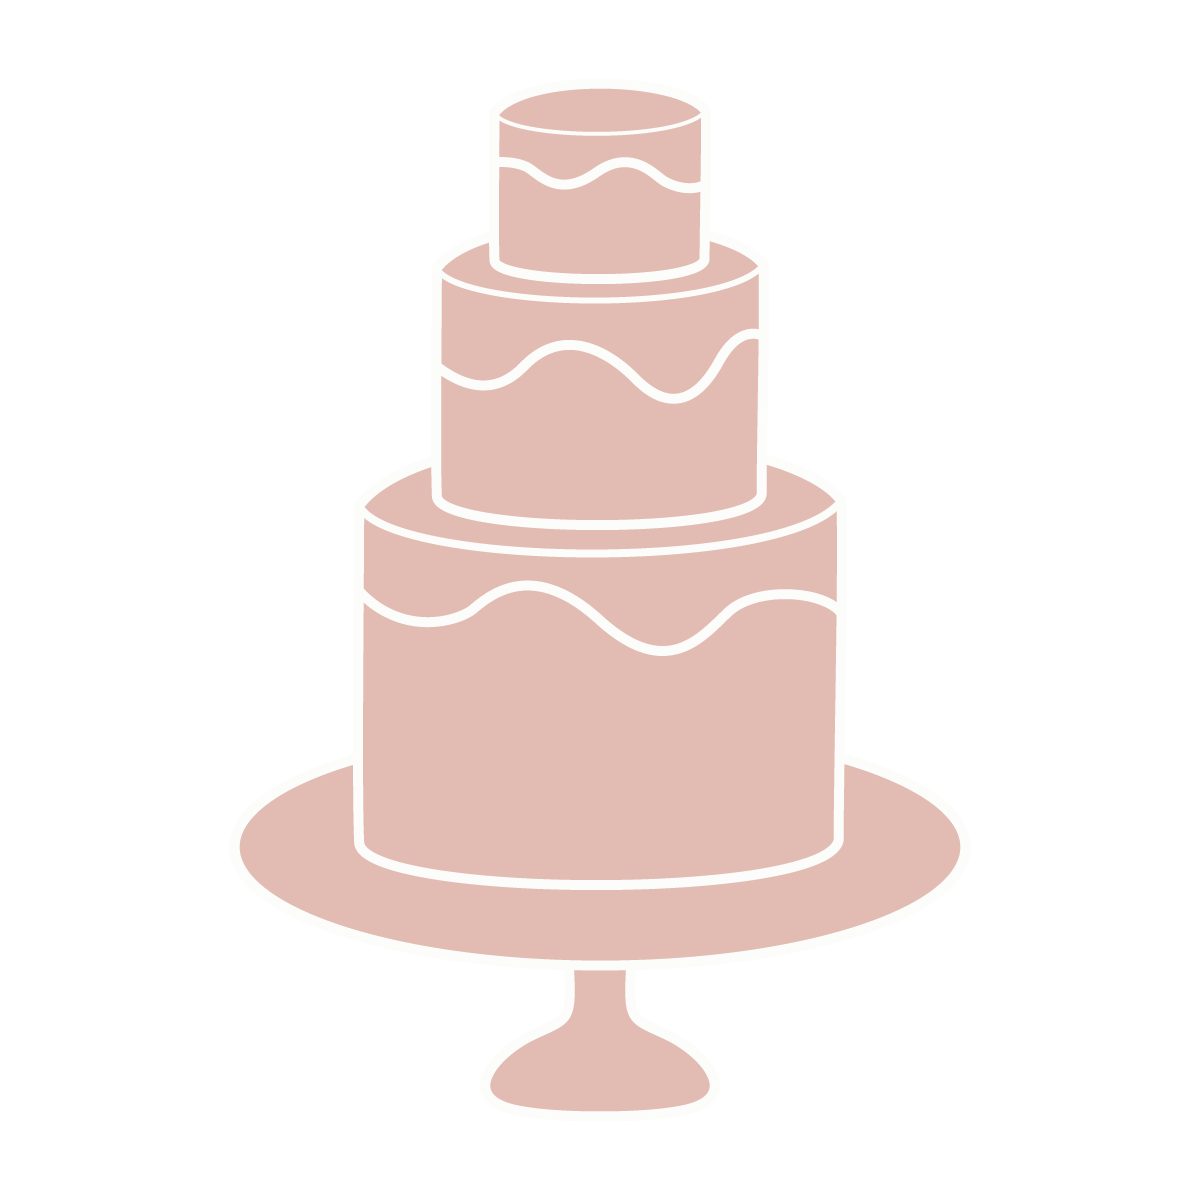 Bride to be cake | engagement cake 3 tier cake wedding reception cake |  Order Cake Online - Cake Square Chennai | Cake Shop in Chennai